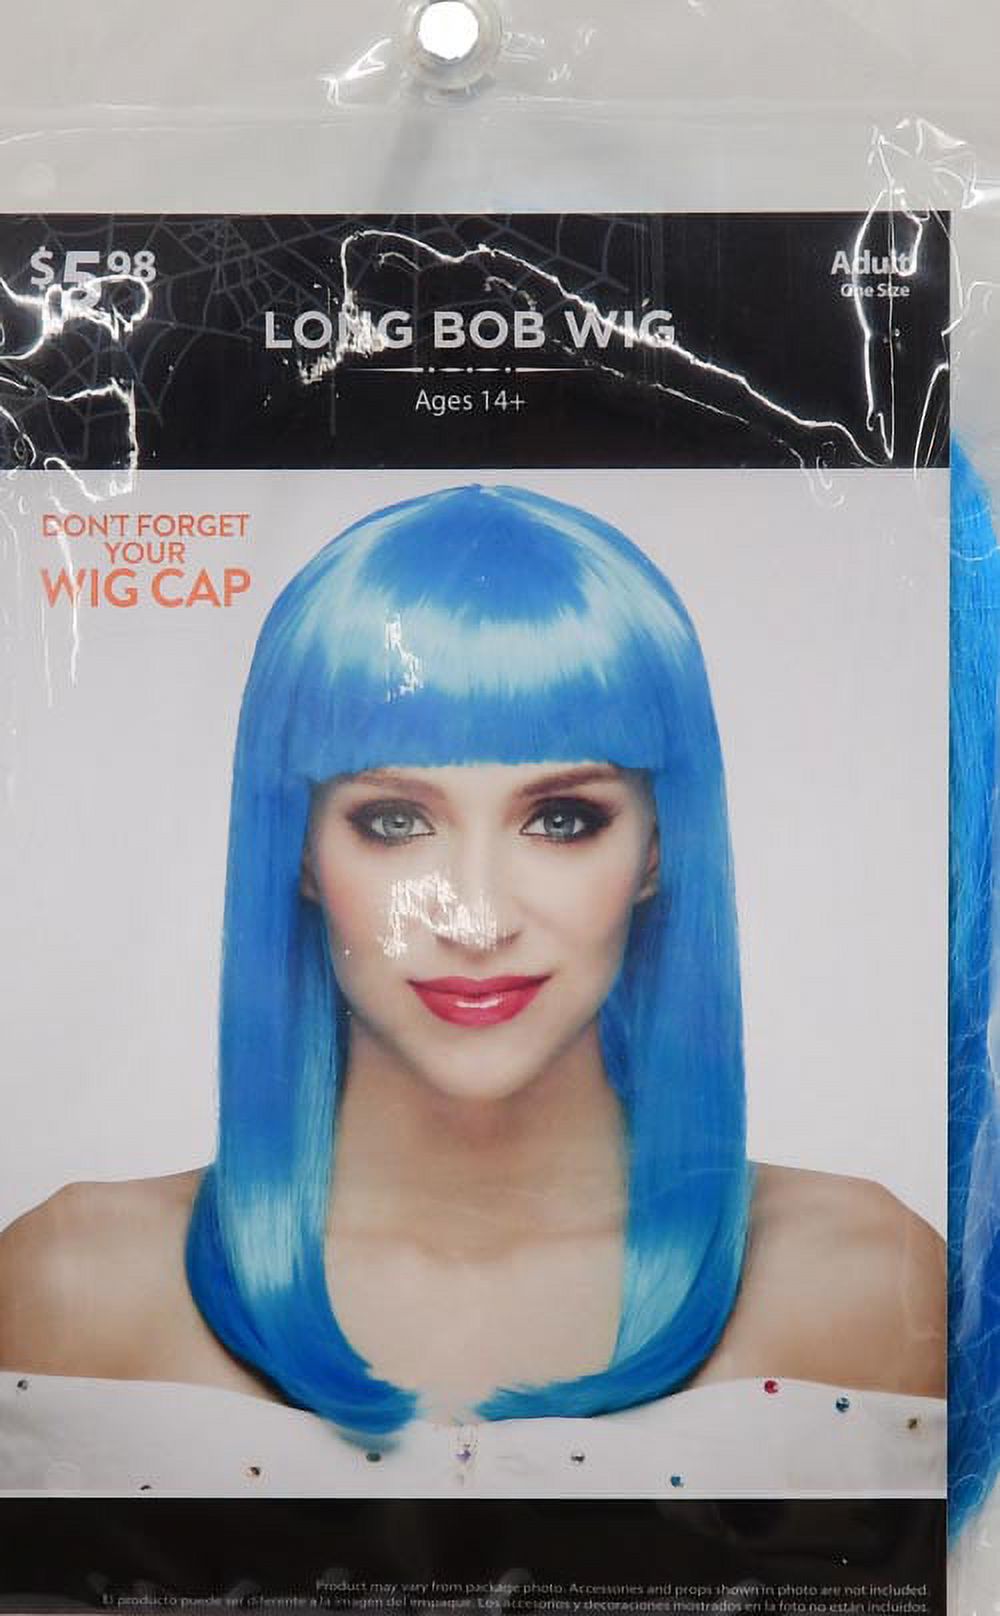 Long Bob Wig Halloween Costume Accessory - image 2 of 2